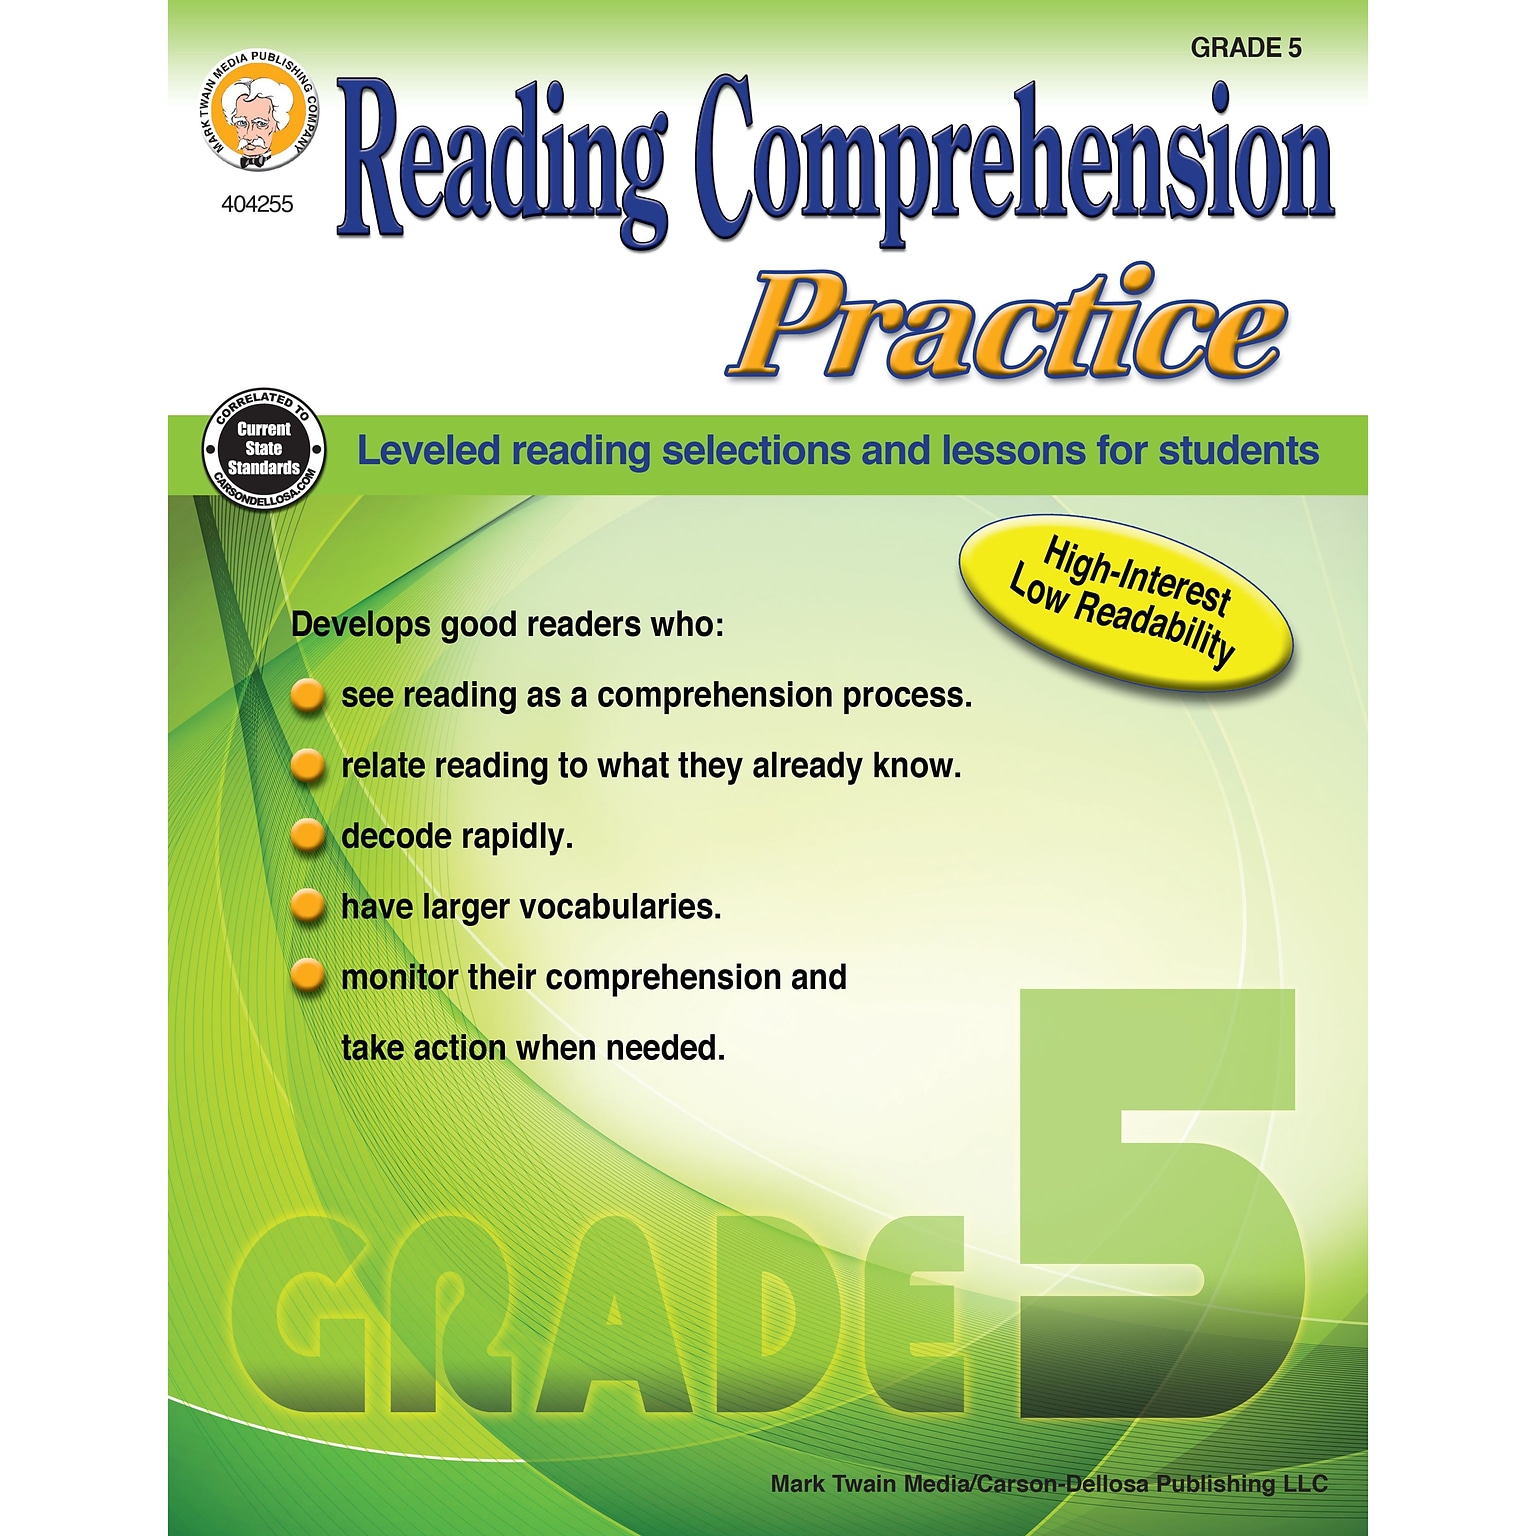 Reading Comprehension Practice, Grade 5 Paperback (404255)